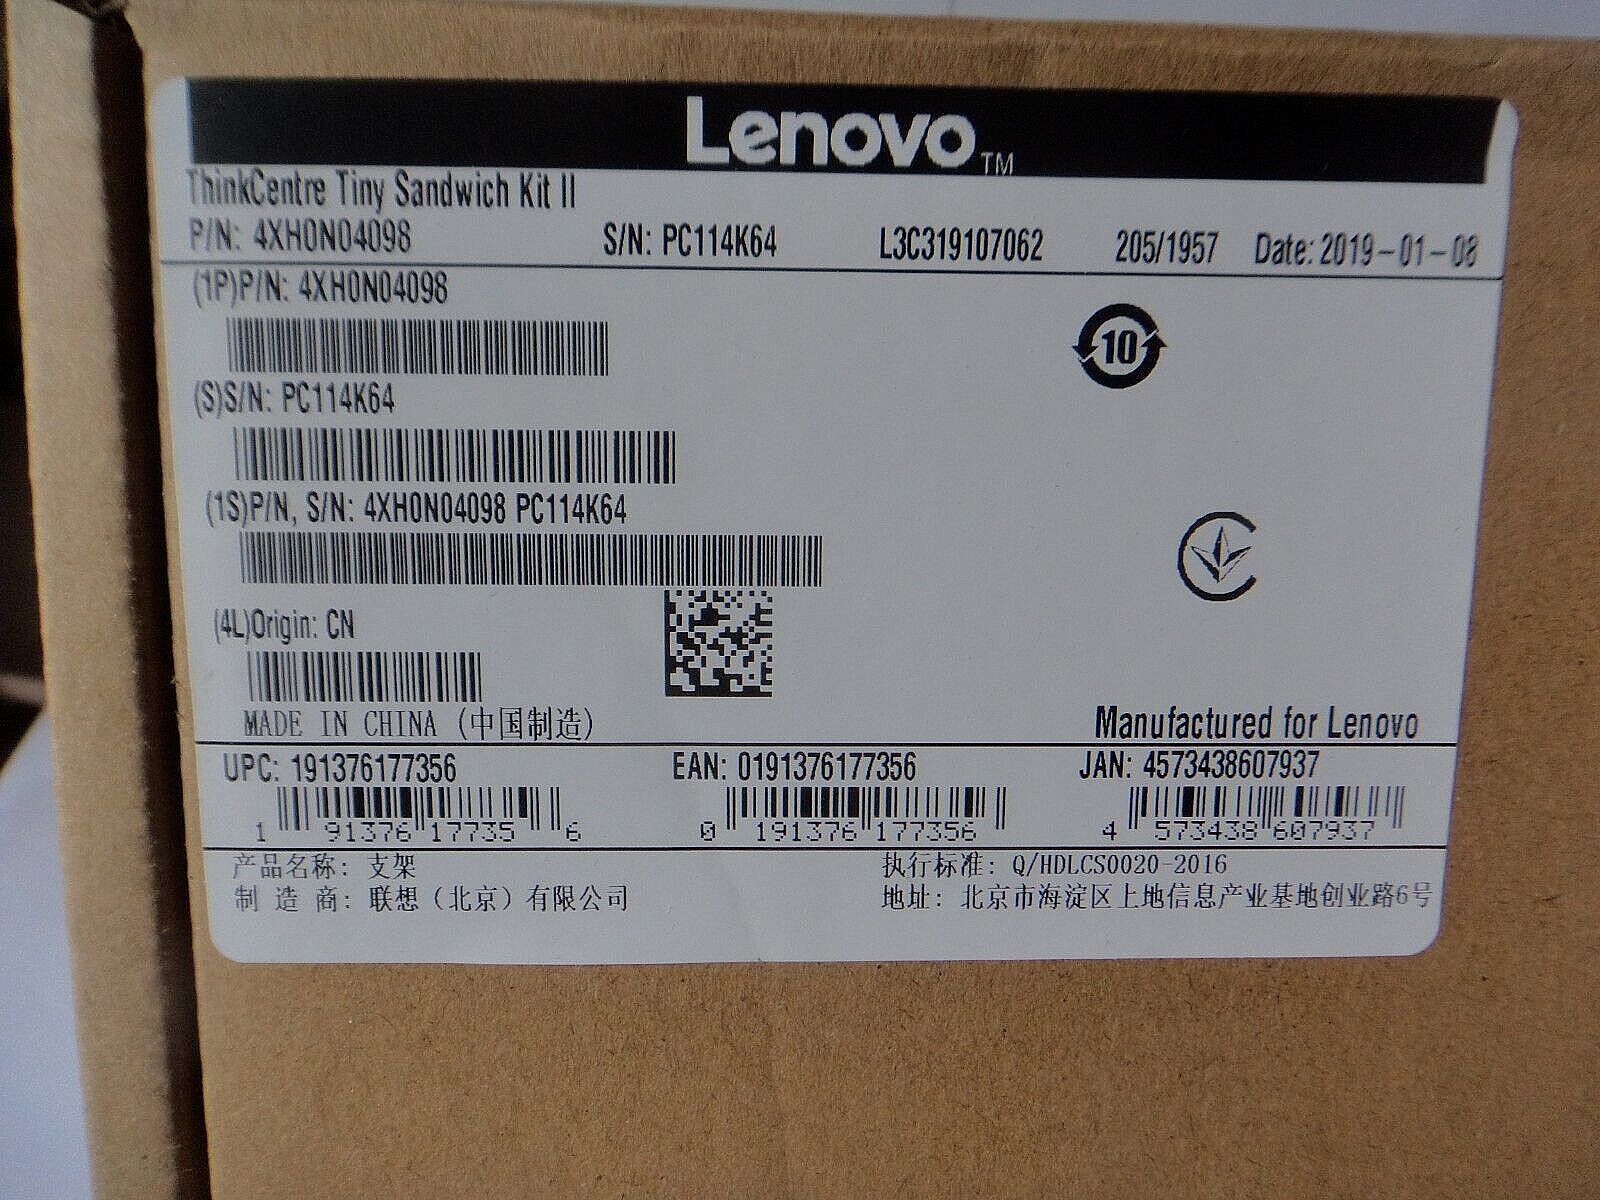 LOT OF TEN Lenovo ThinkCentre TINY Sandwich Kit II 4XH0N04098  FACTORY SEALED